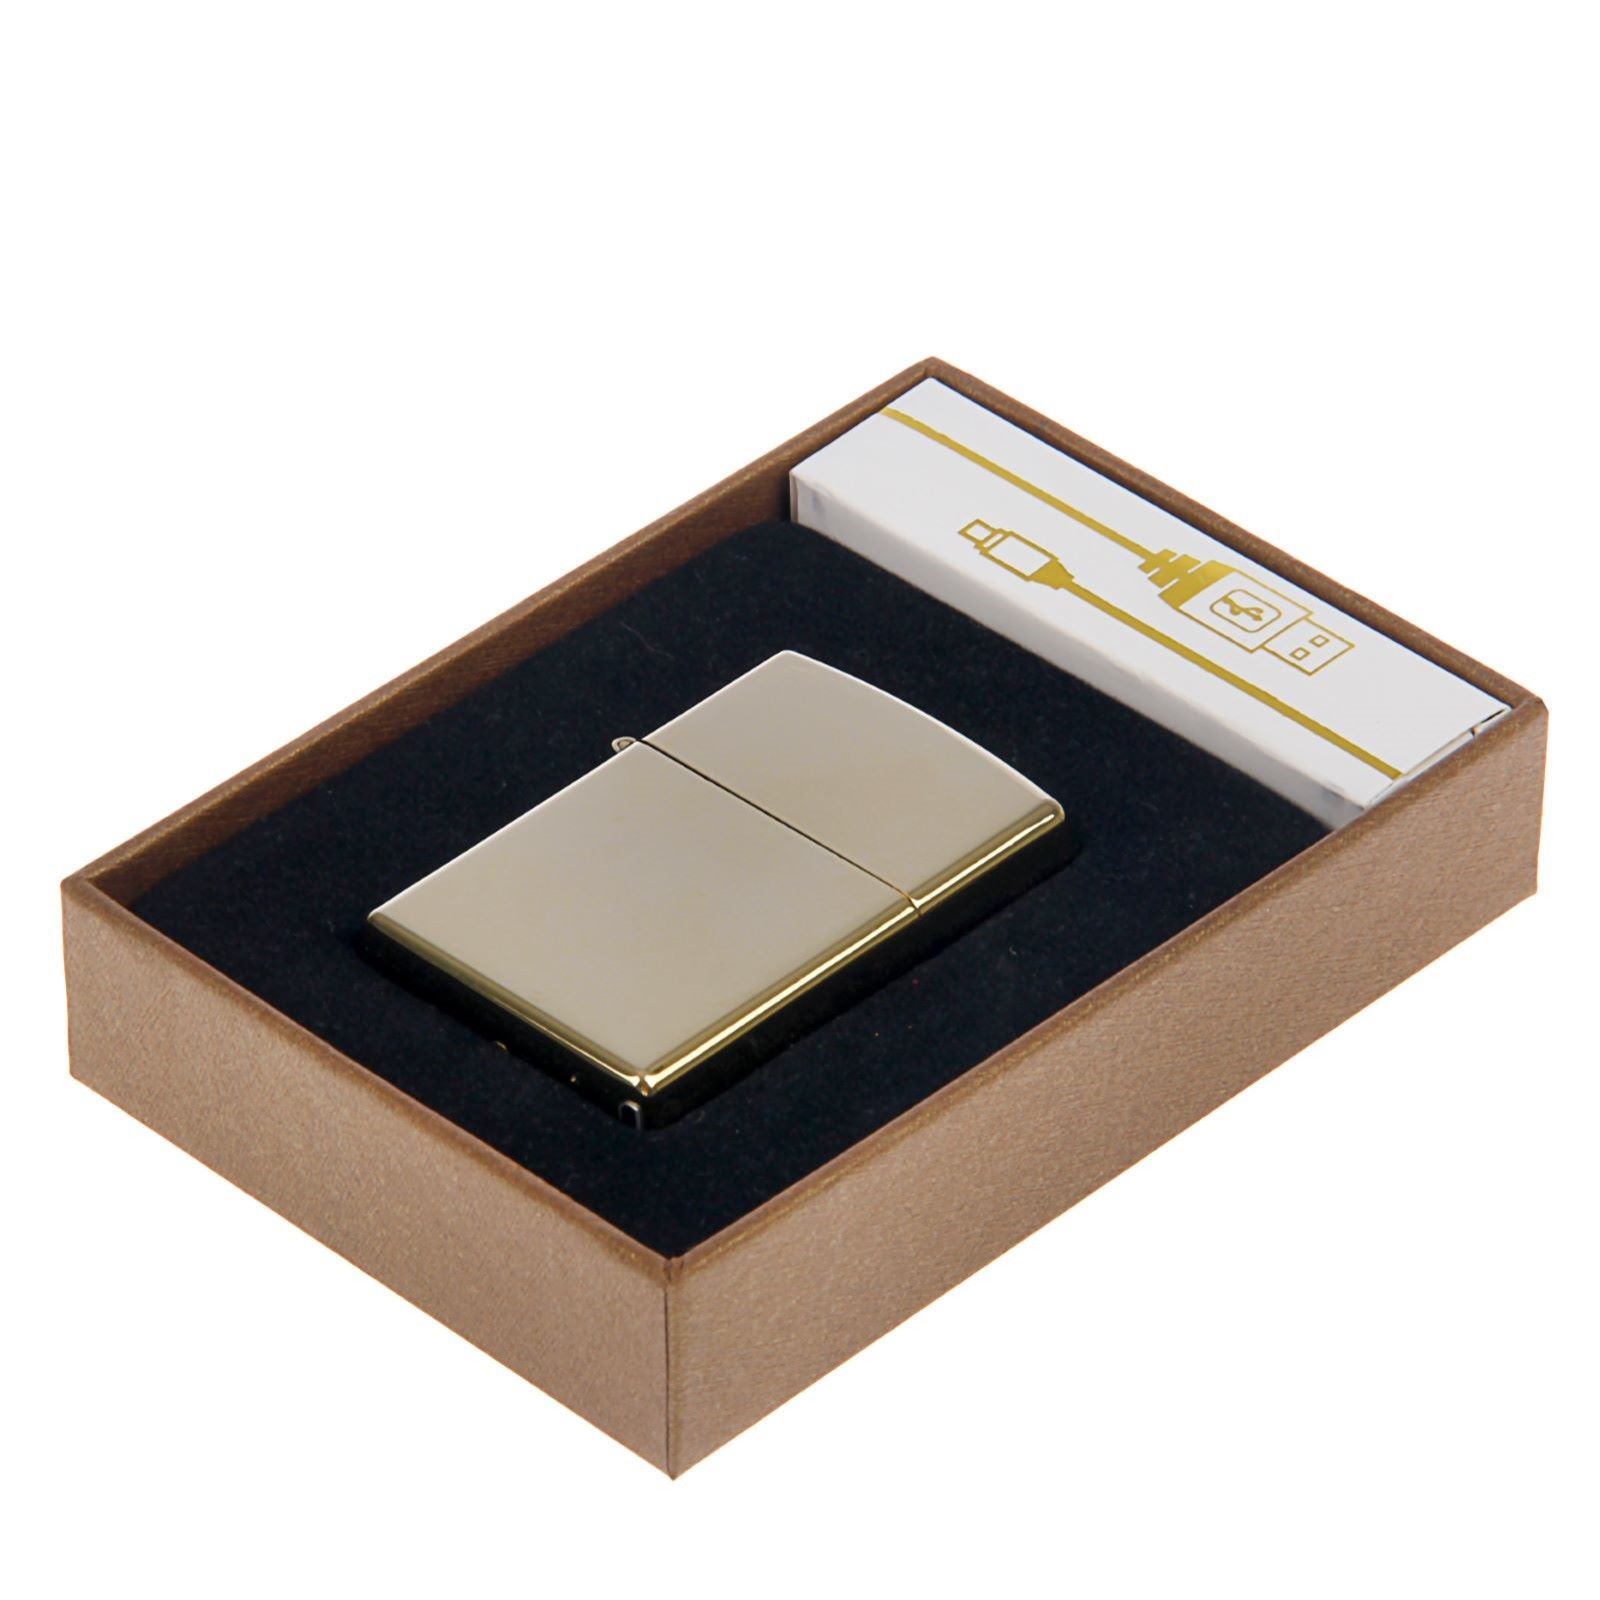  электронная, дуговая, USB, 5.6 х 3.8 х 1.3 см, золотой хром .